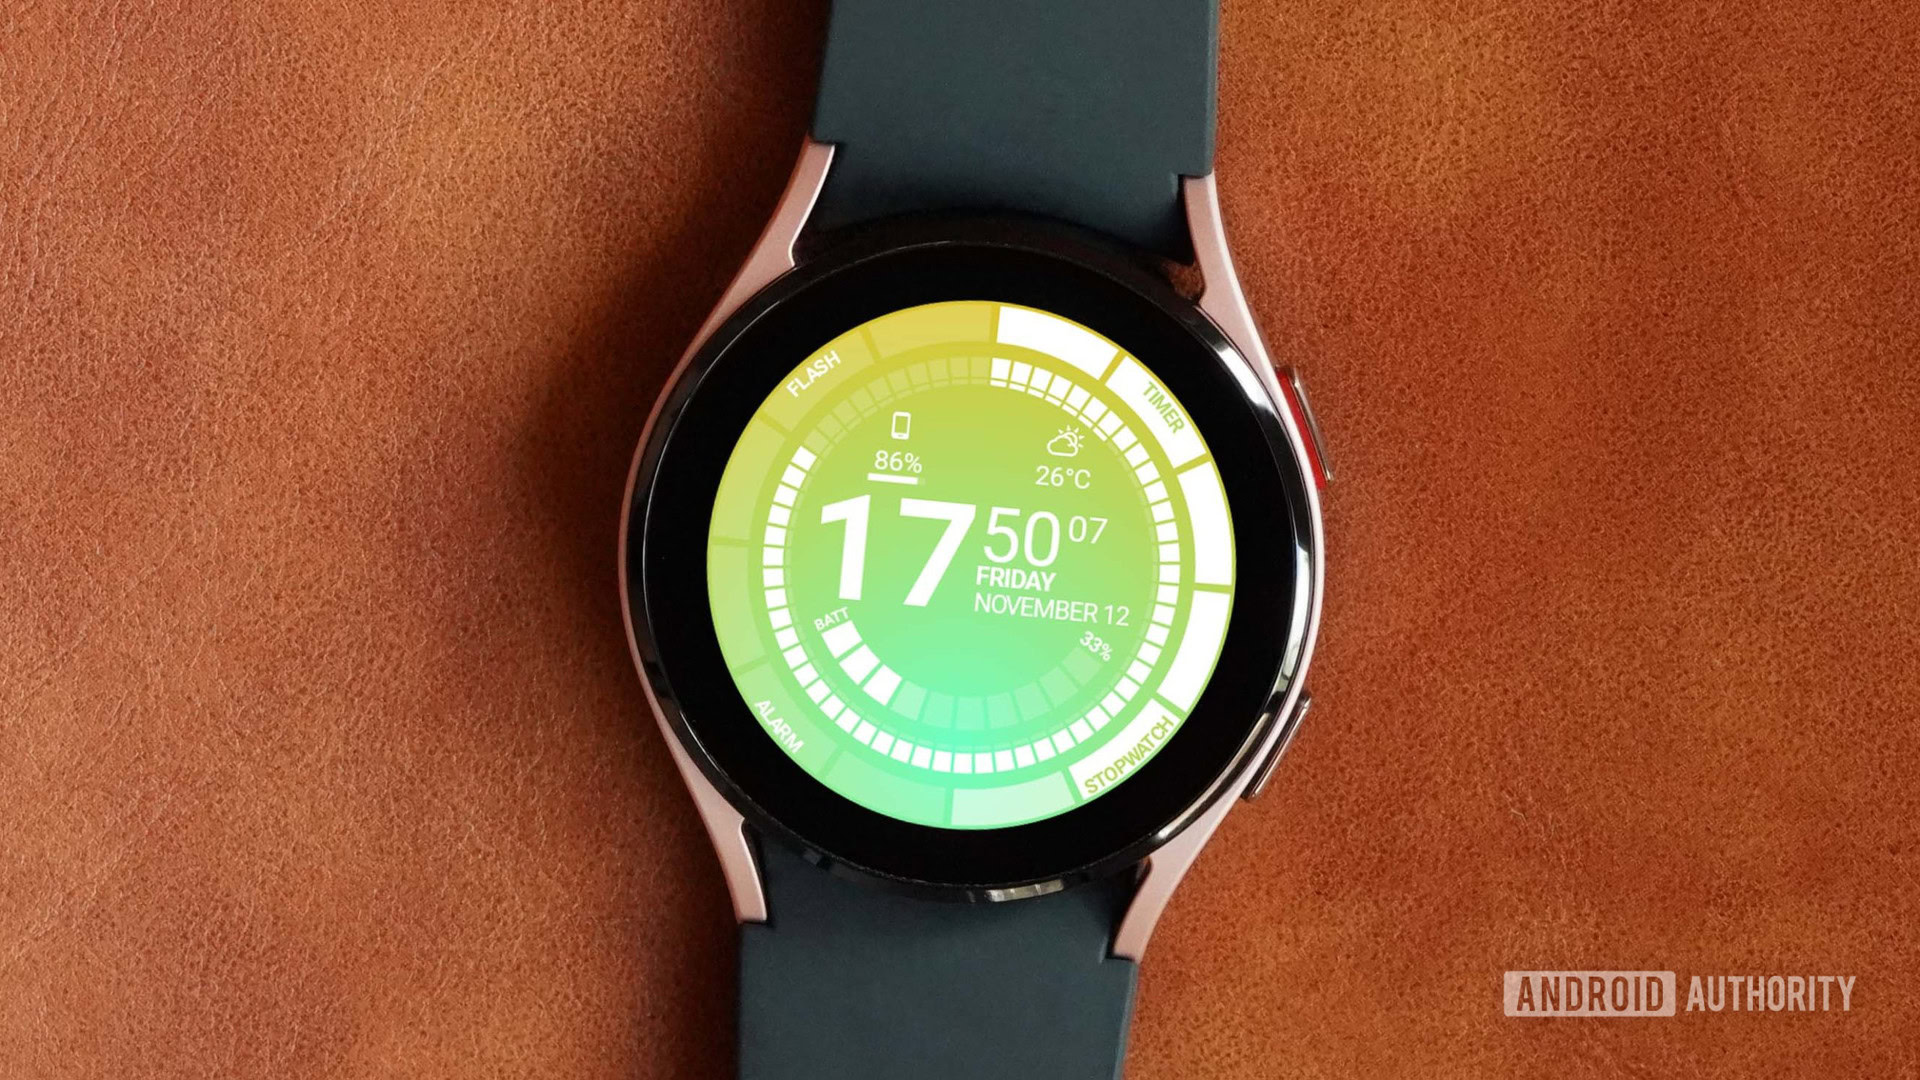 TIMEFLIK Watch Face - Apps on Google Play